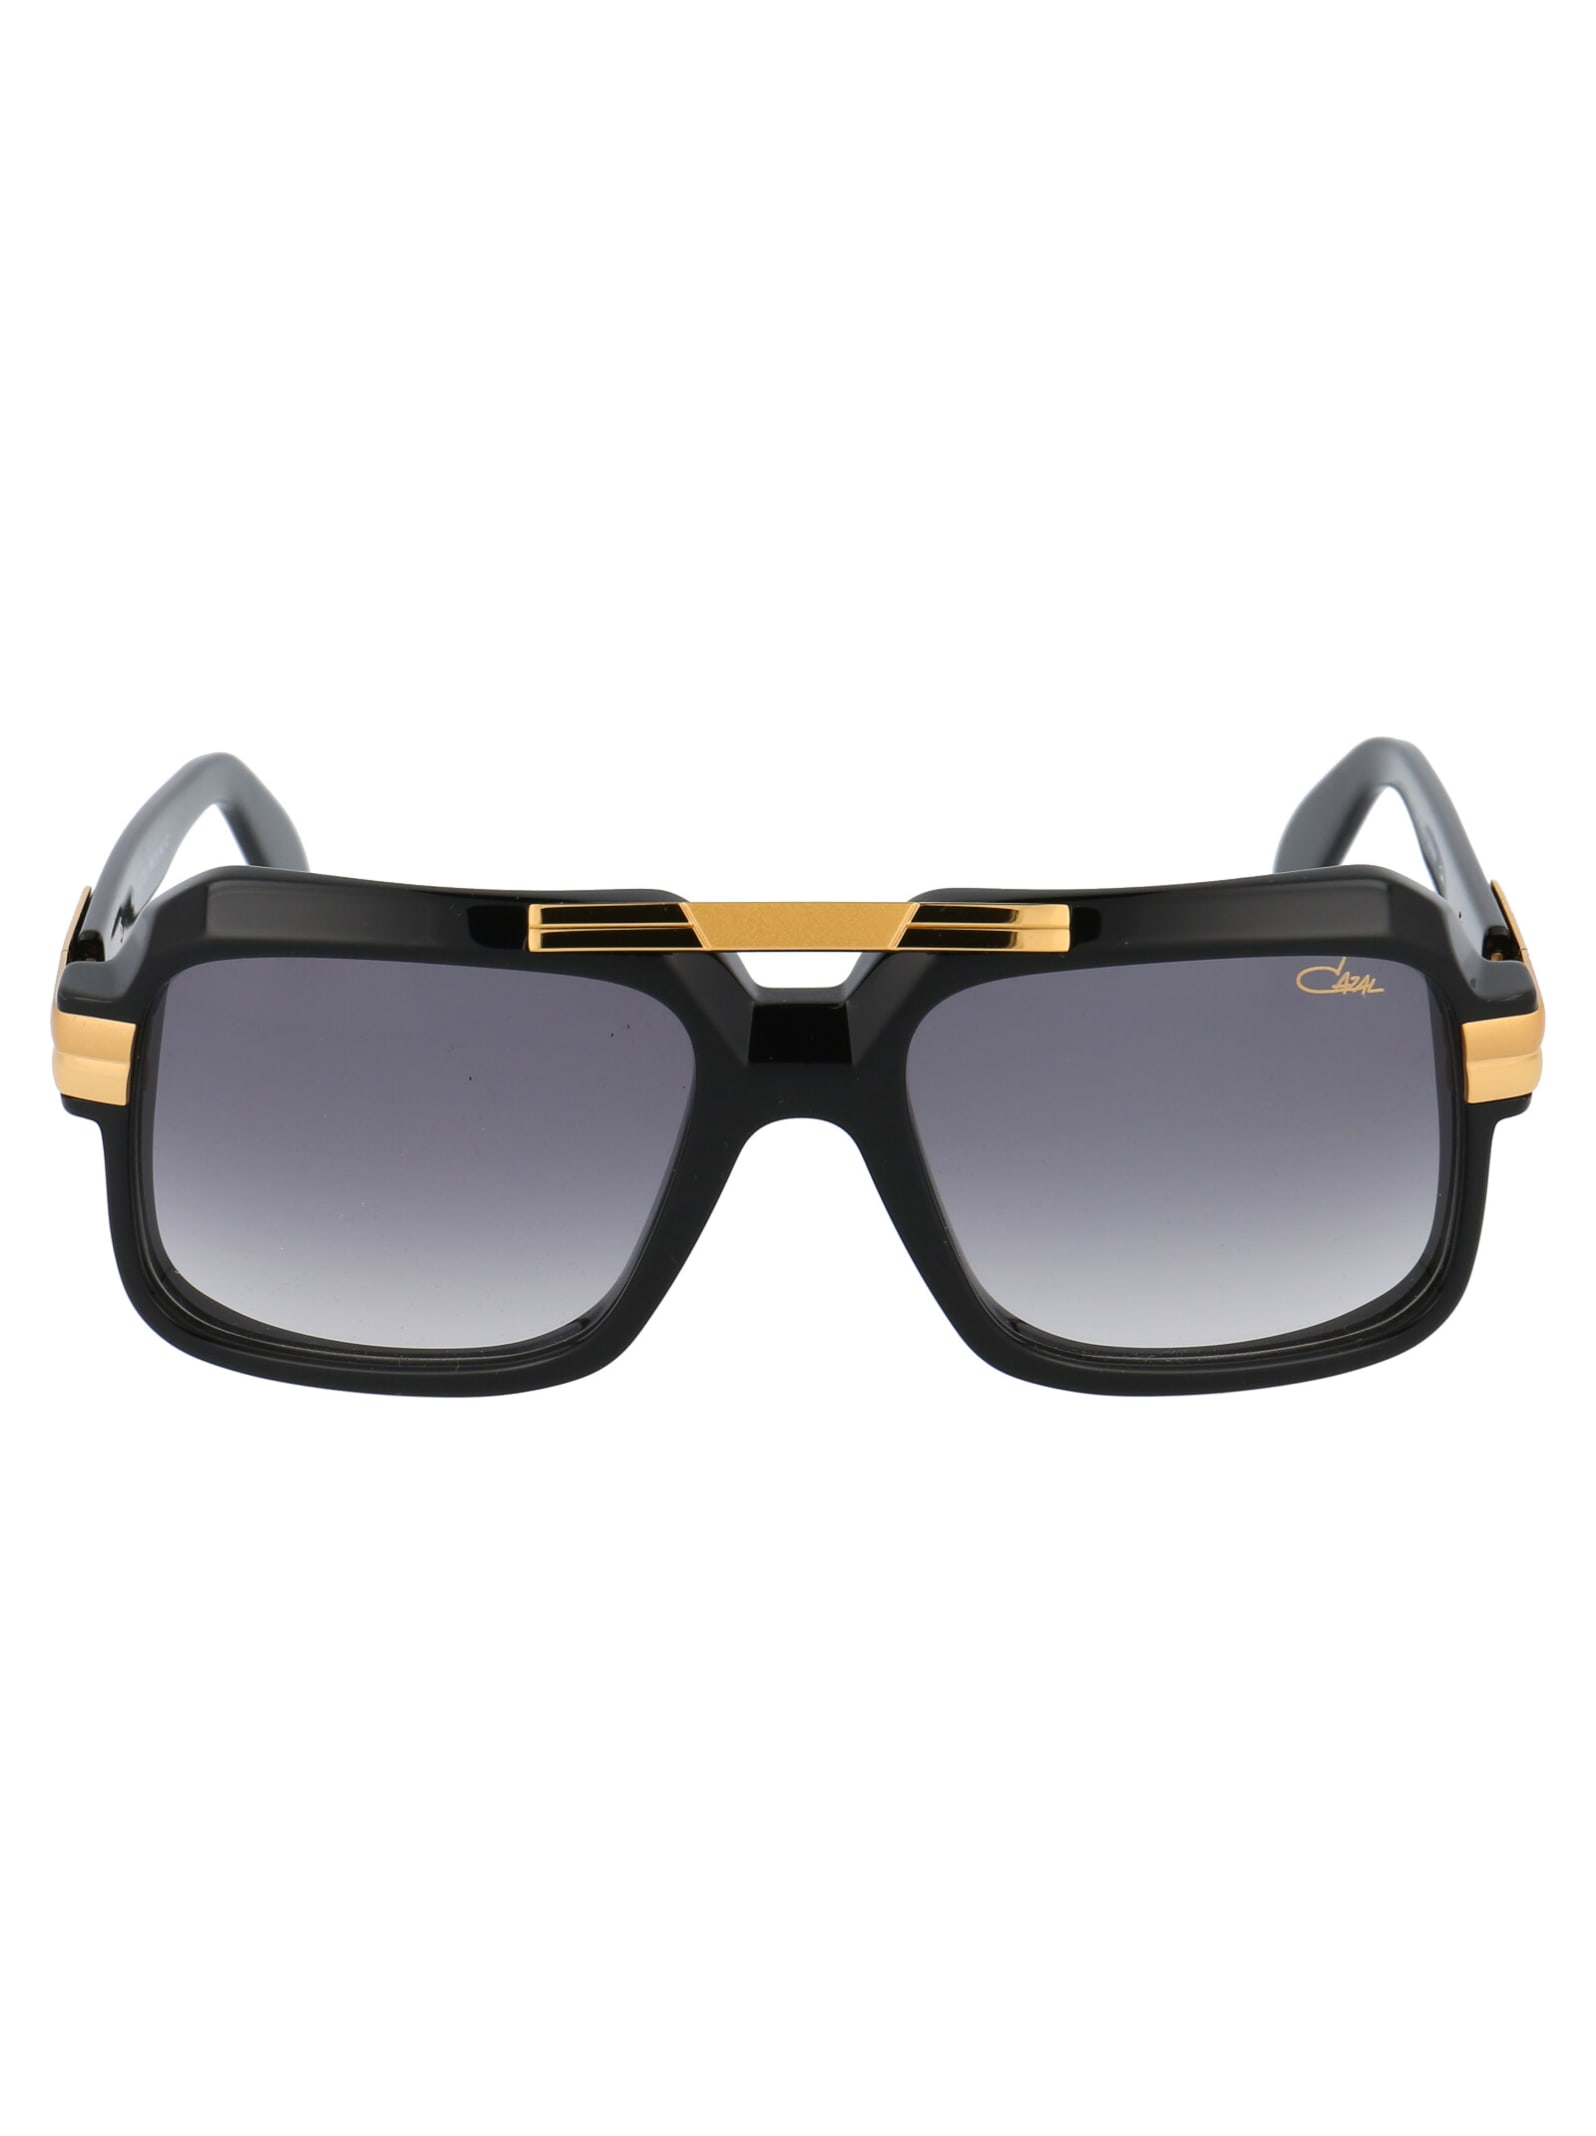 Cazal Mod. 663/3 Sunglasses